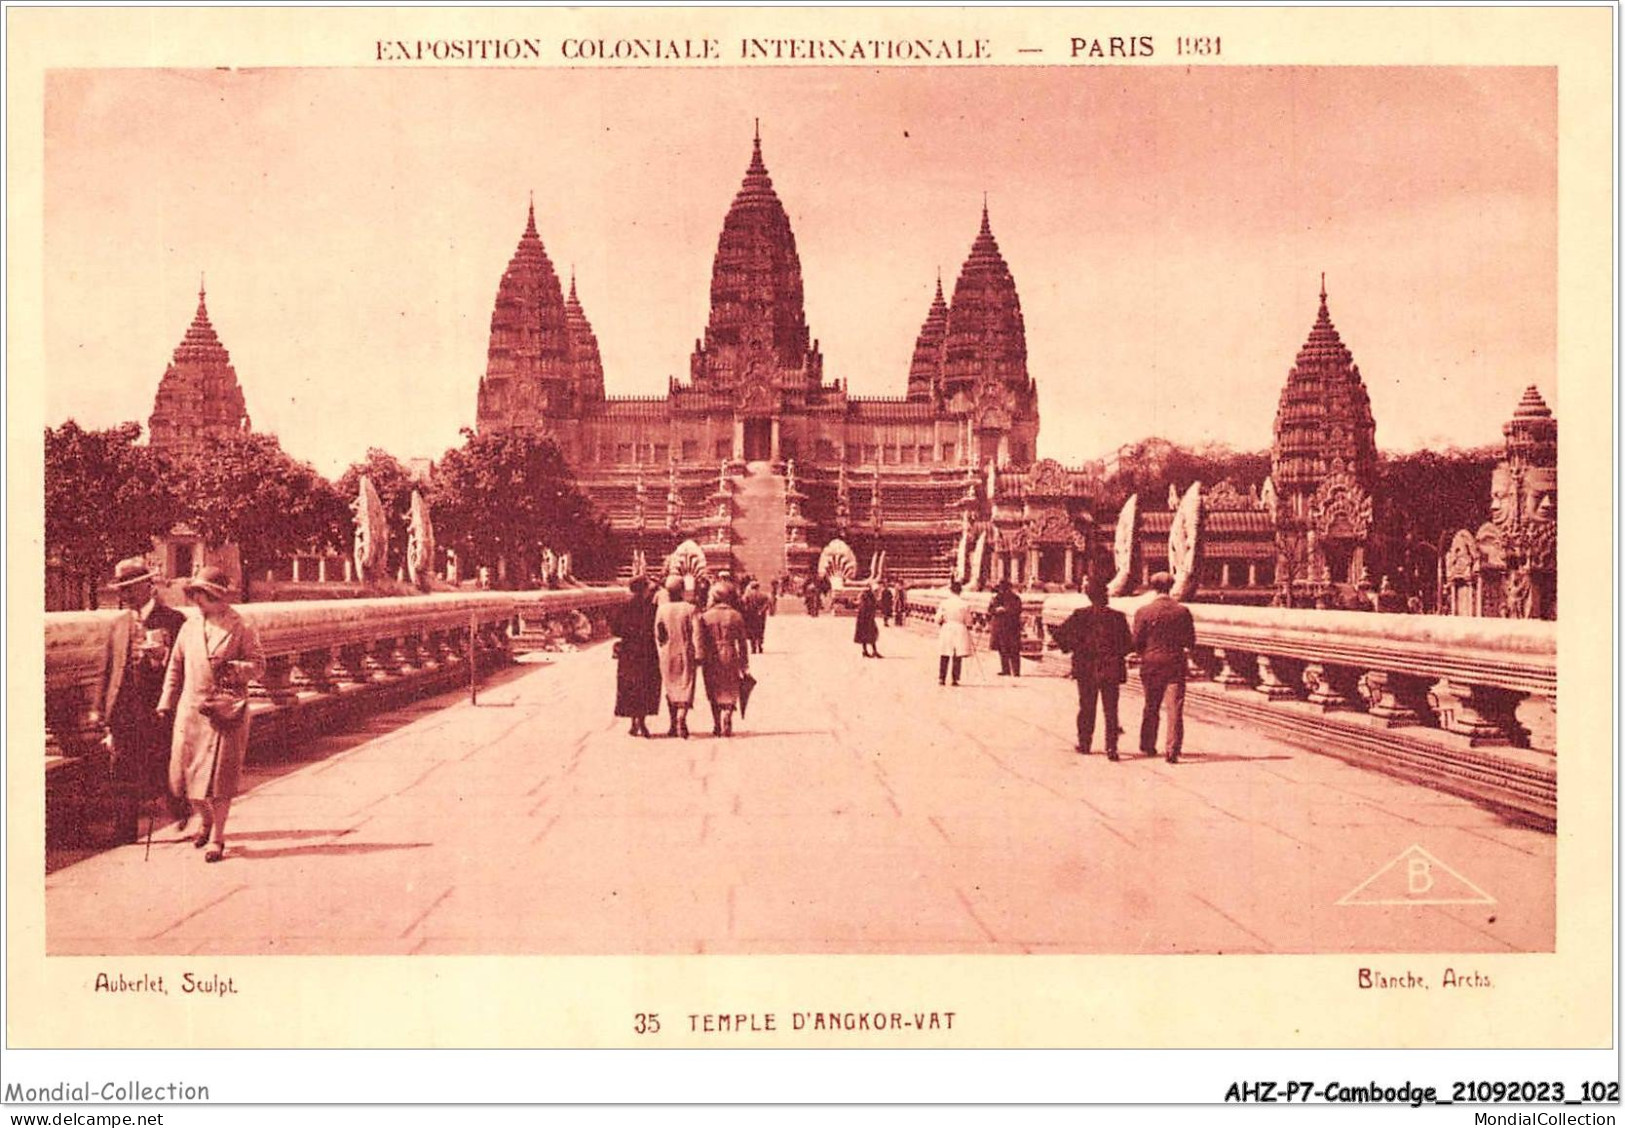 AHZP7-CAMBODGE-0647 - EXPOSITION COLONIALE INTERNATIONALE - PARIS 1931 - TEMPLE D'ANGKOR-VAT - Kambodscha